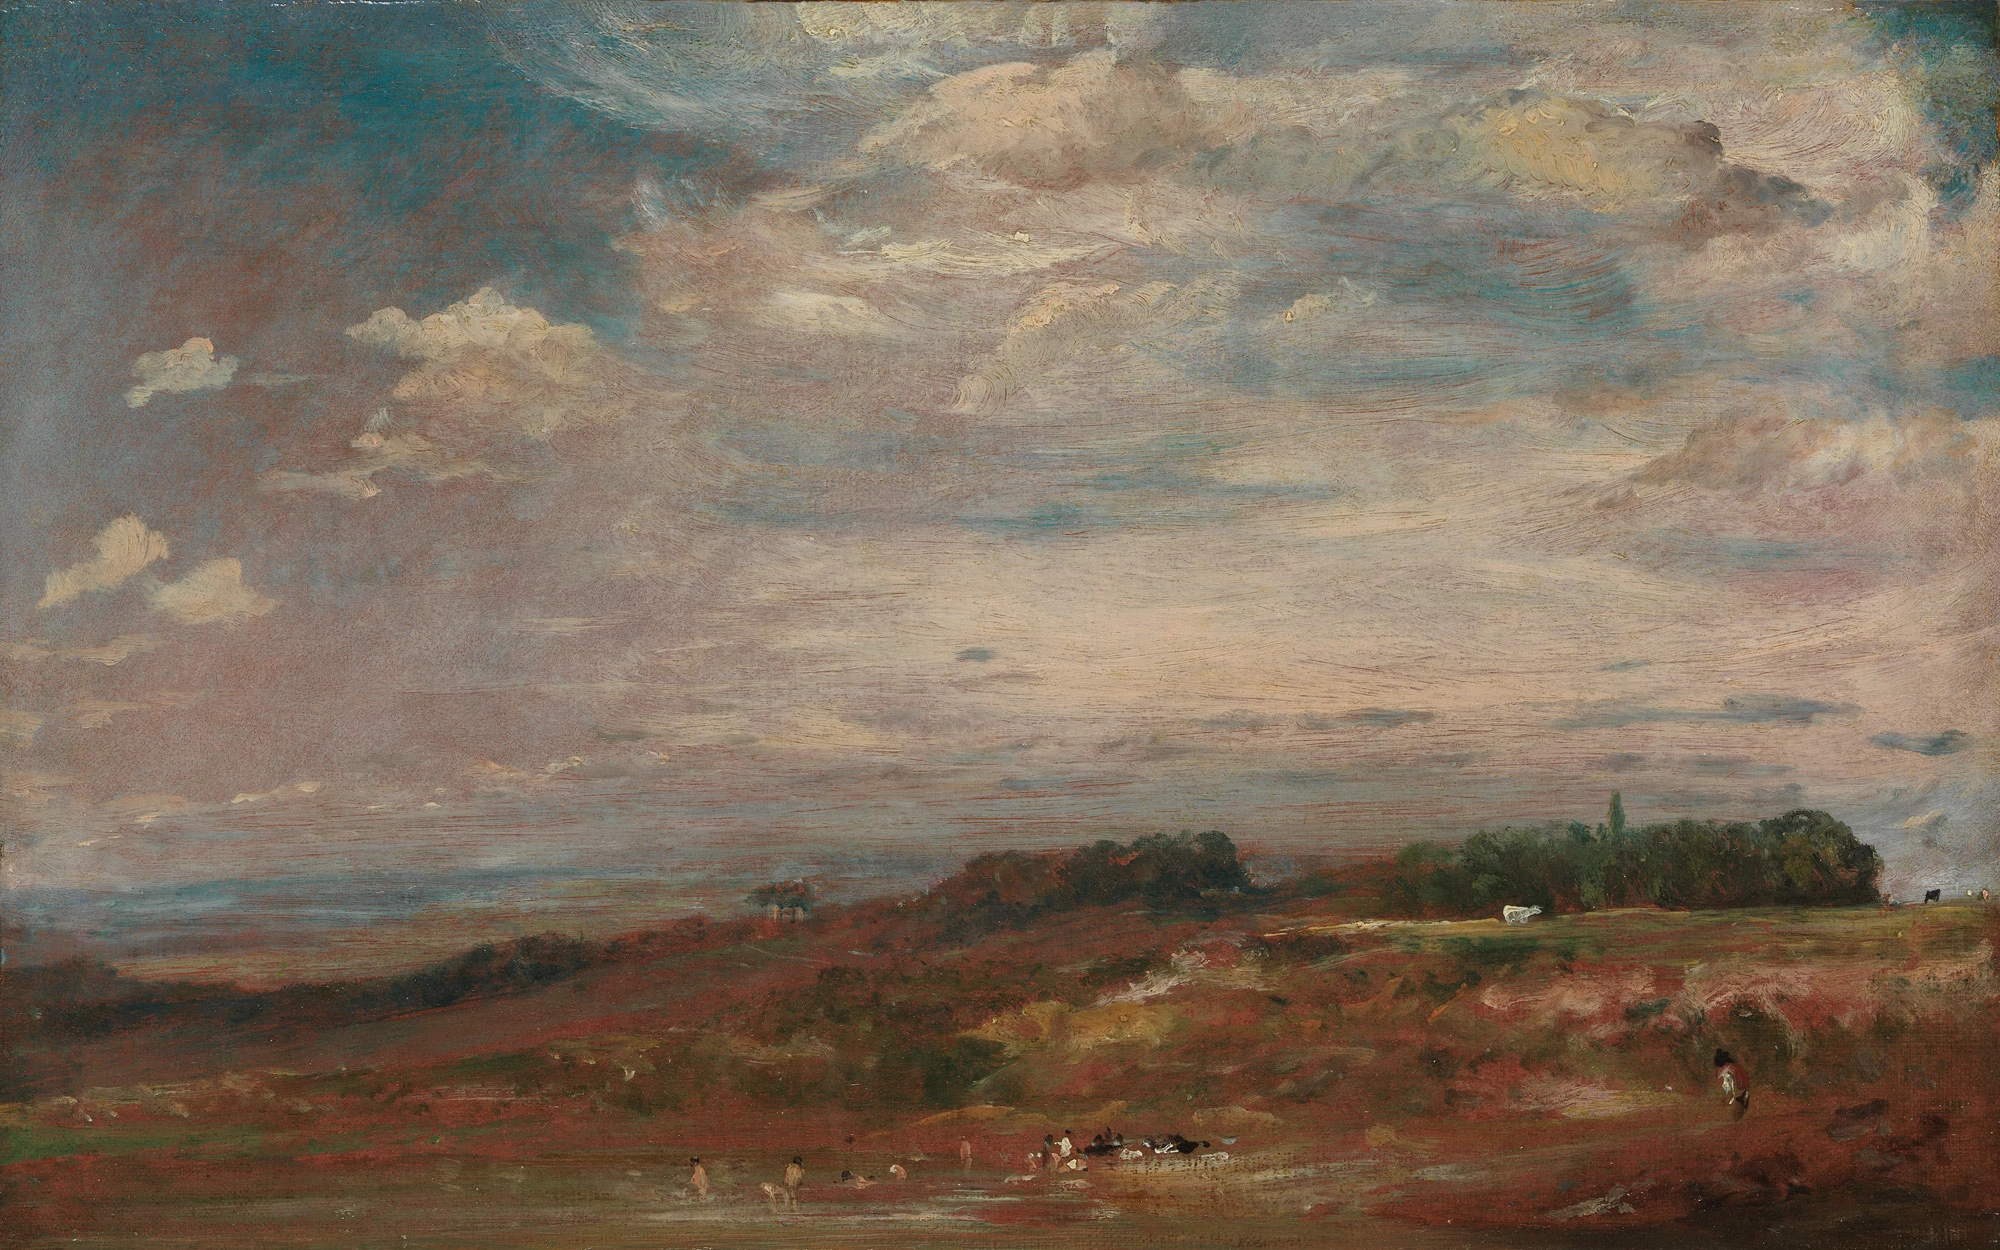 Hampstead Heath with Bathers, John Constable